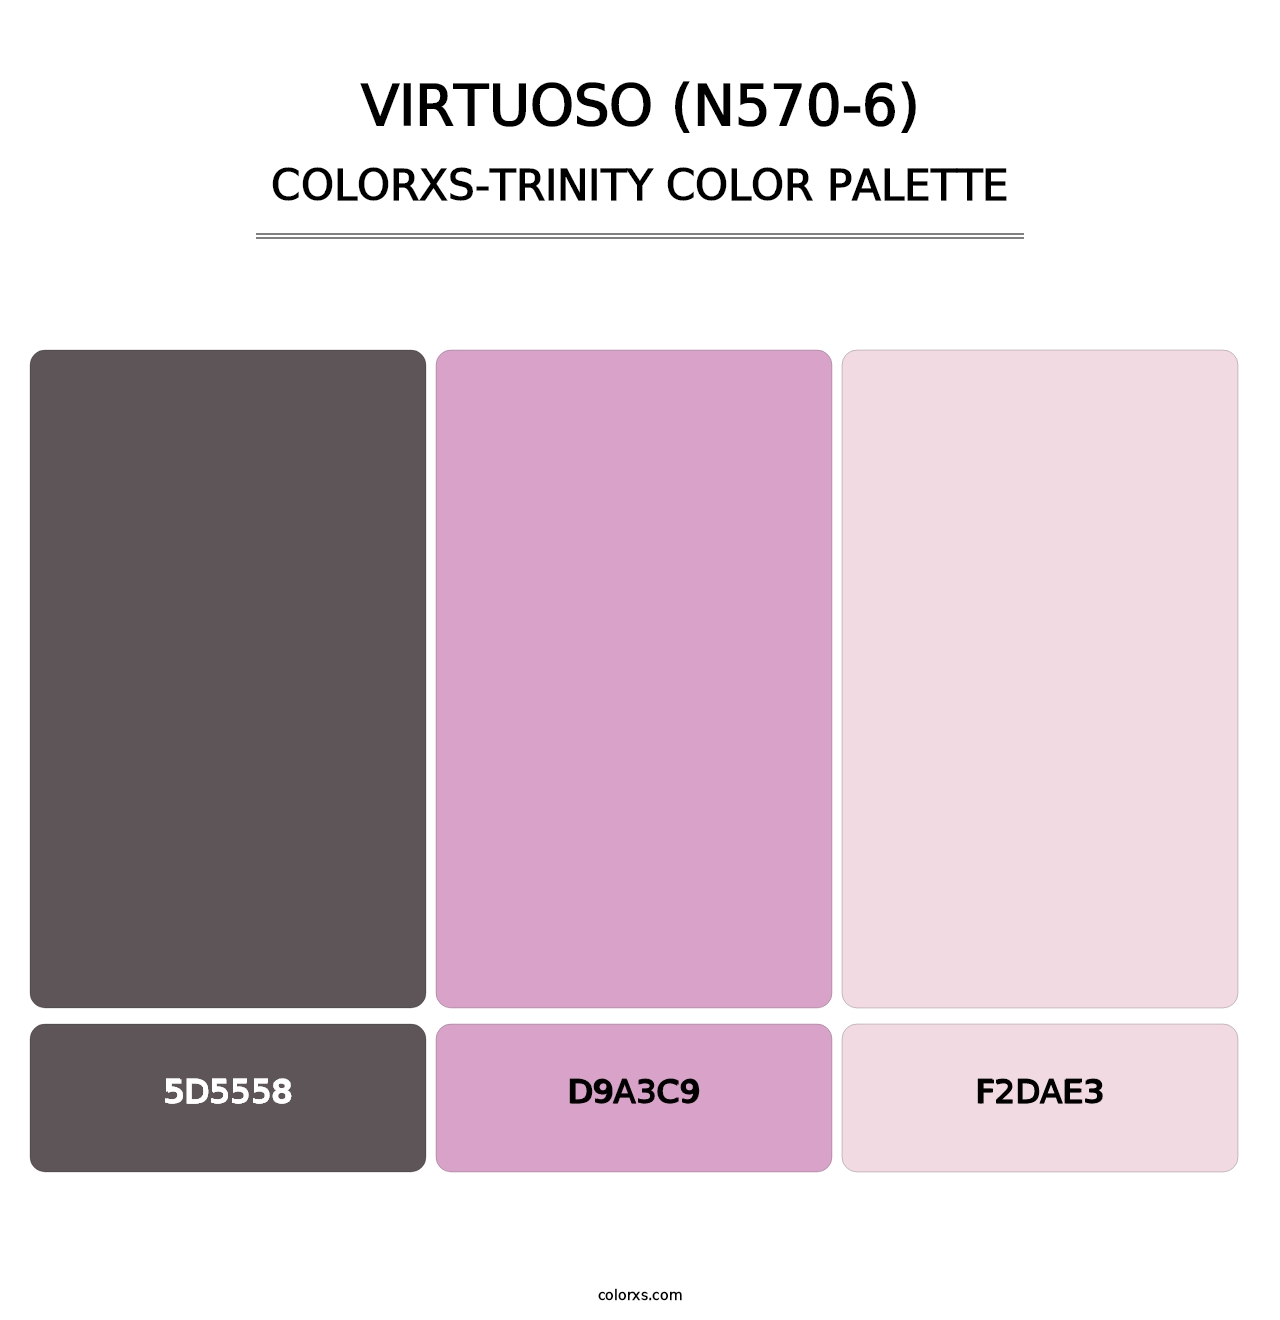 Virtuoso (N570-6) - Colorxs Trinity Palette